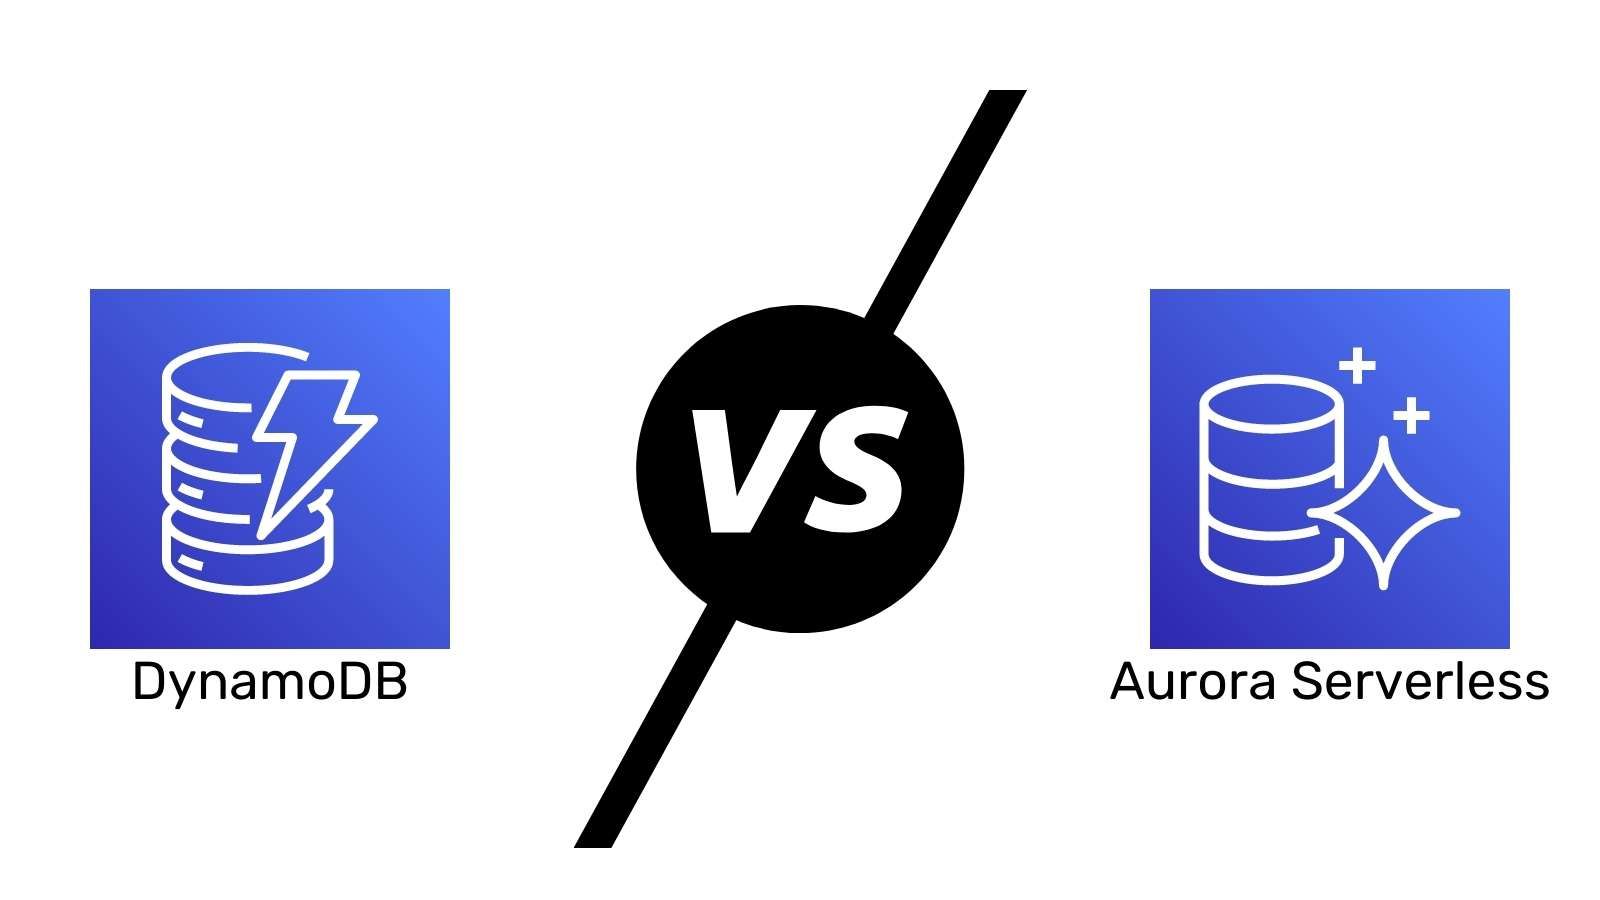 DynamoDB vs. Aurora Serverless